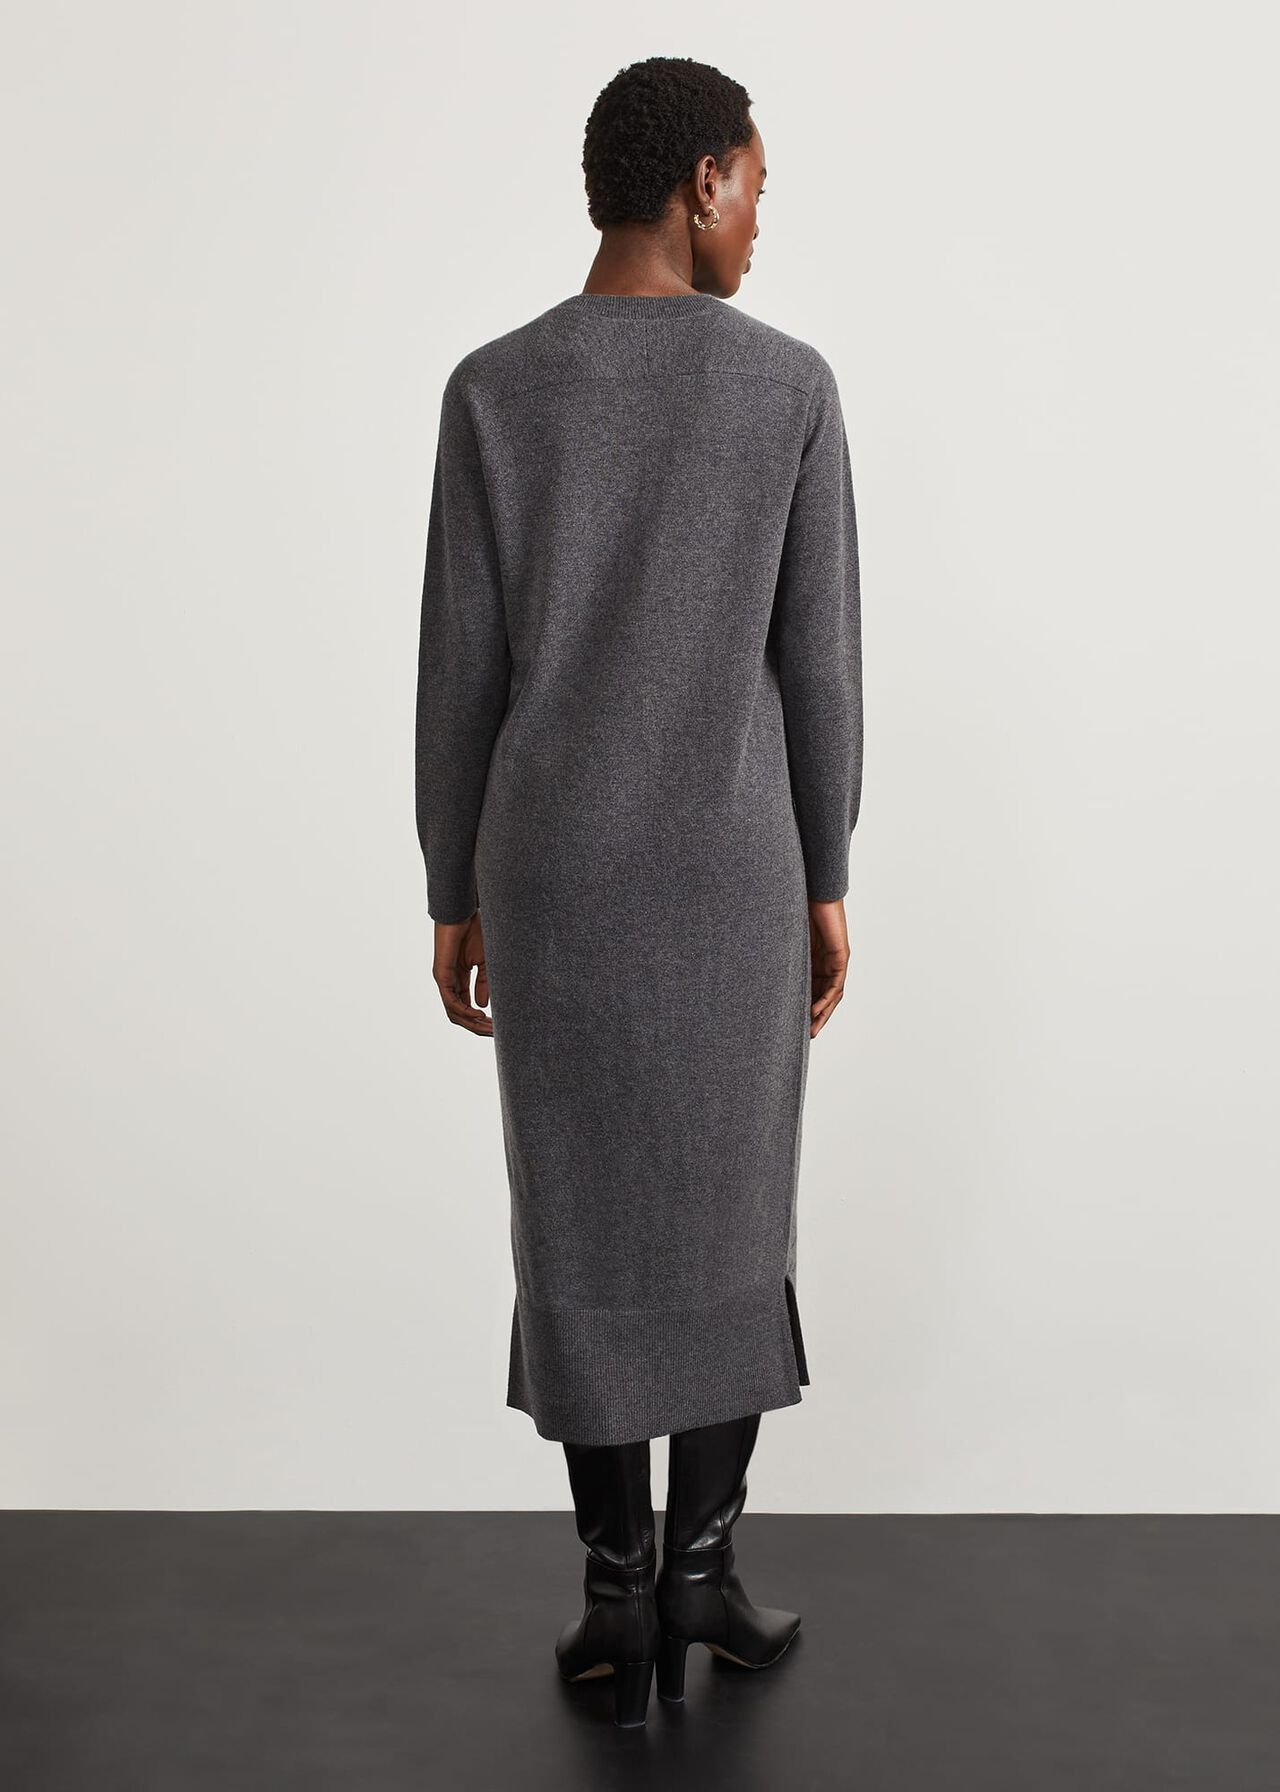 Geneva Knitted Dress With Cashmere, Dark Grey Marl, hi-res